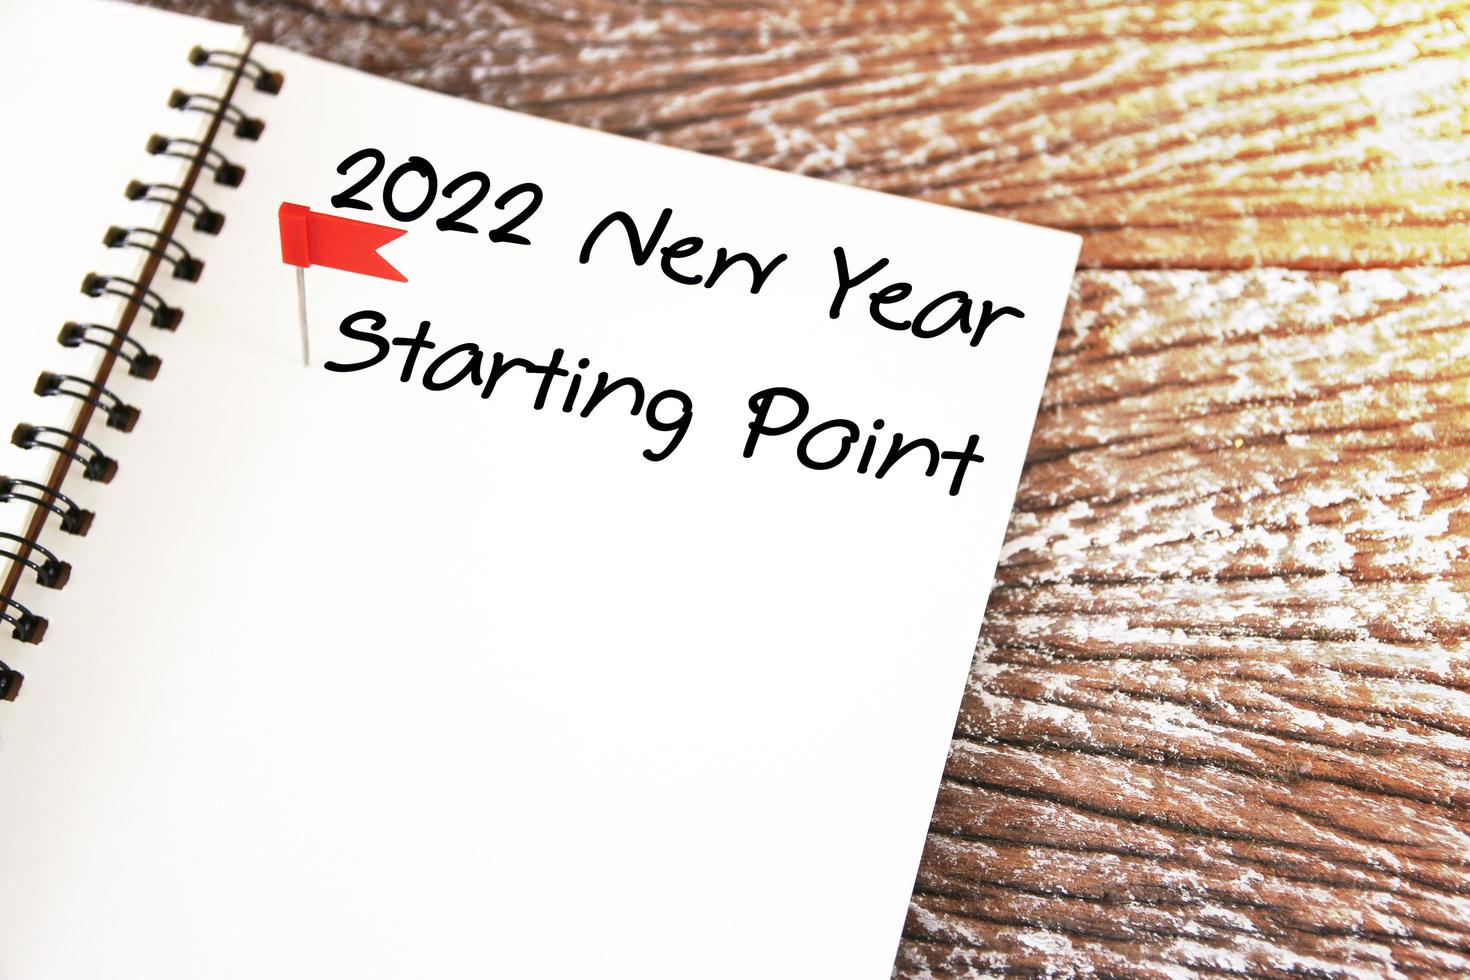 New year resolution goals list starting point 2020 photo